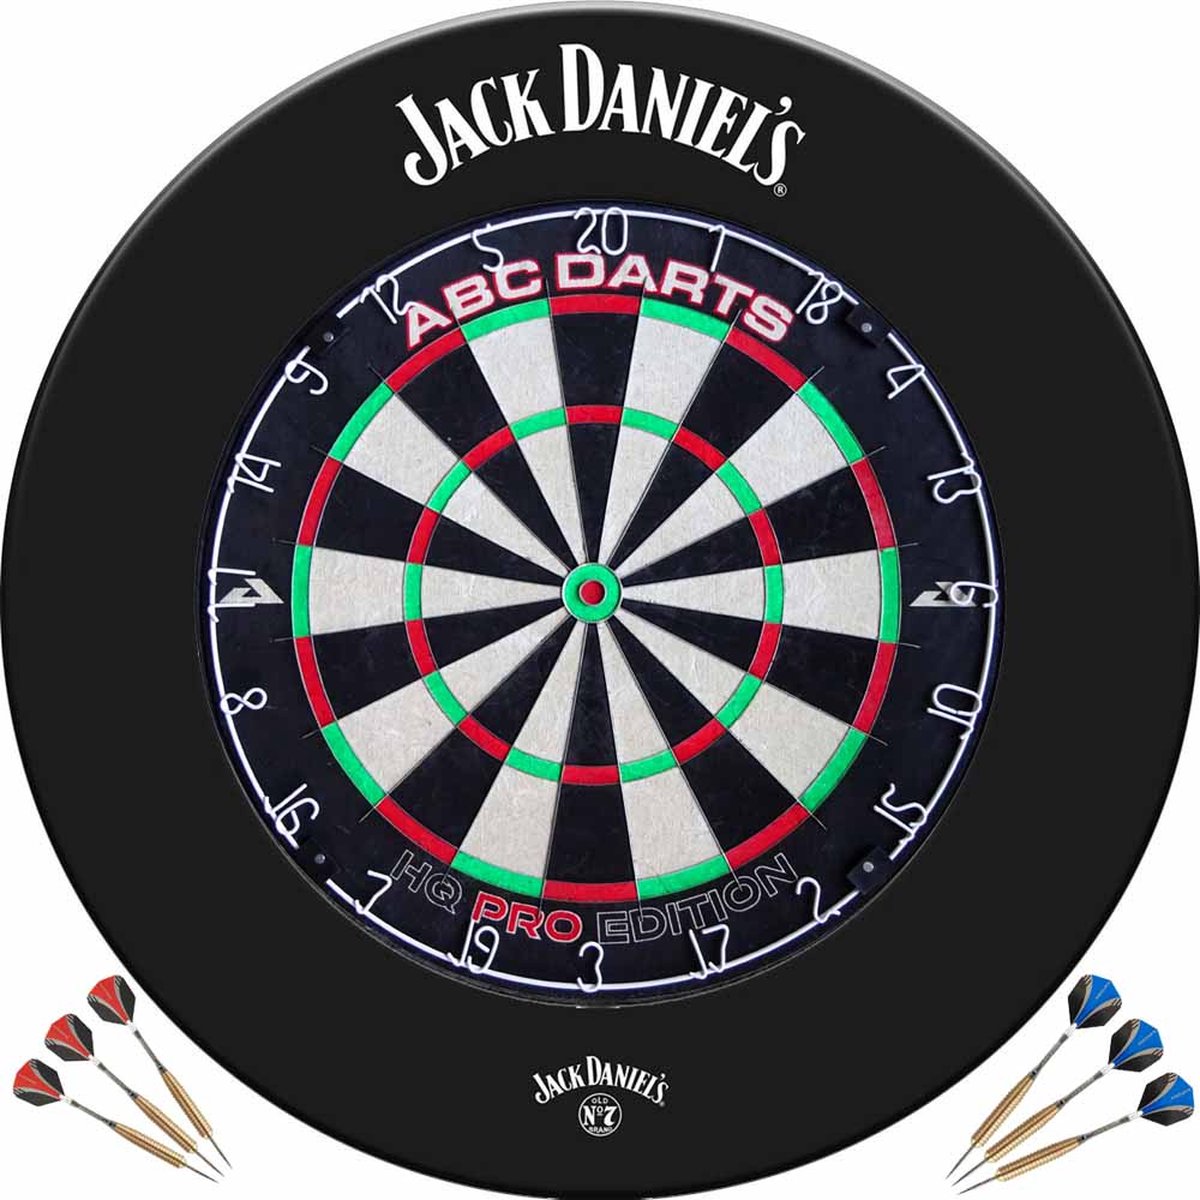 ABC Darts - Dartbord Surround Ring Jack Daniel's + ABCDarts HQ Pro Dartbord + 2 Sets Darts